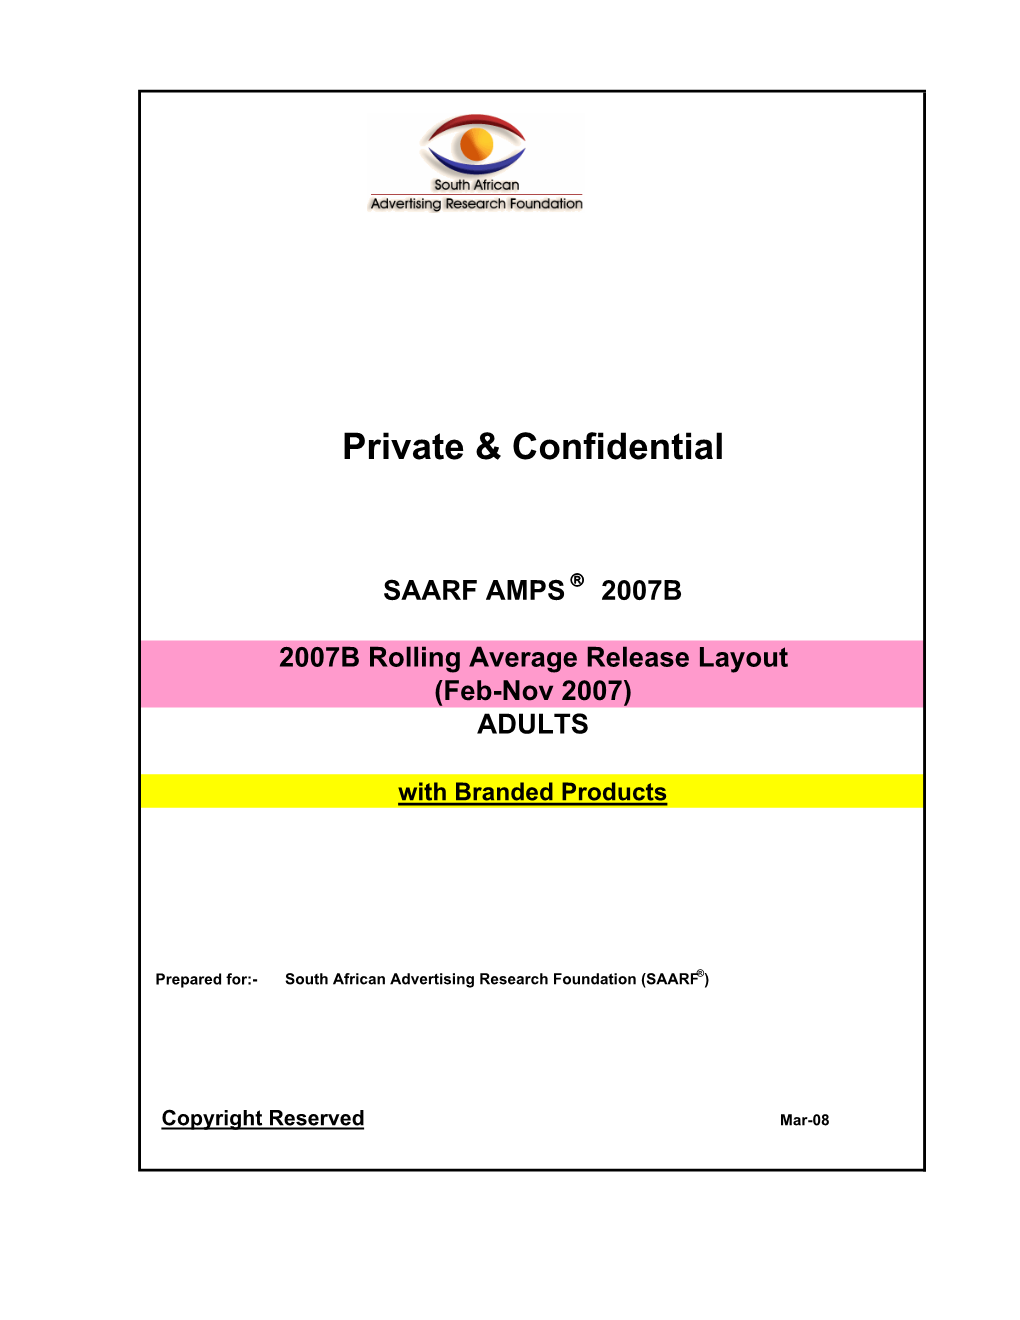 Private & Confidential